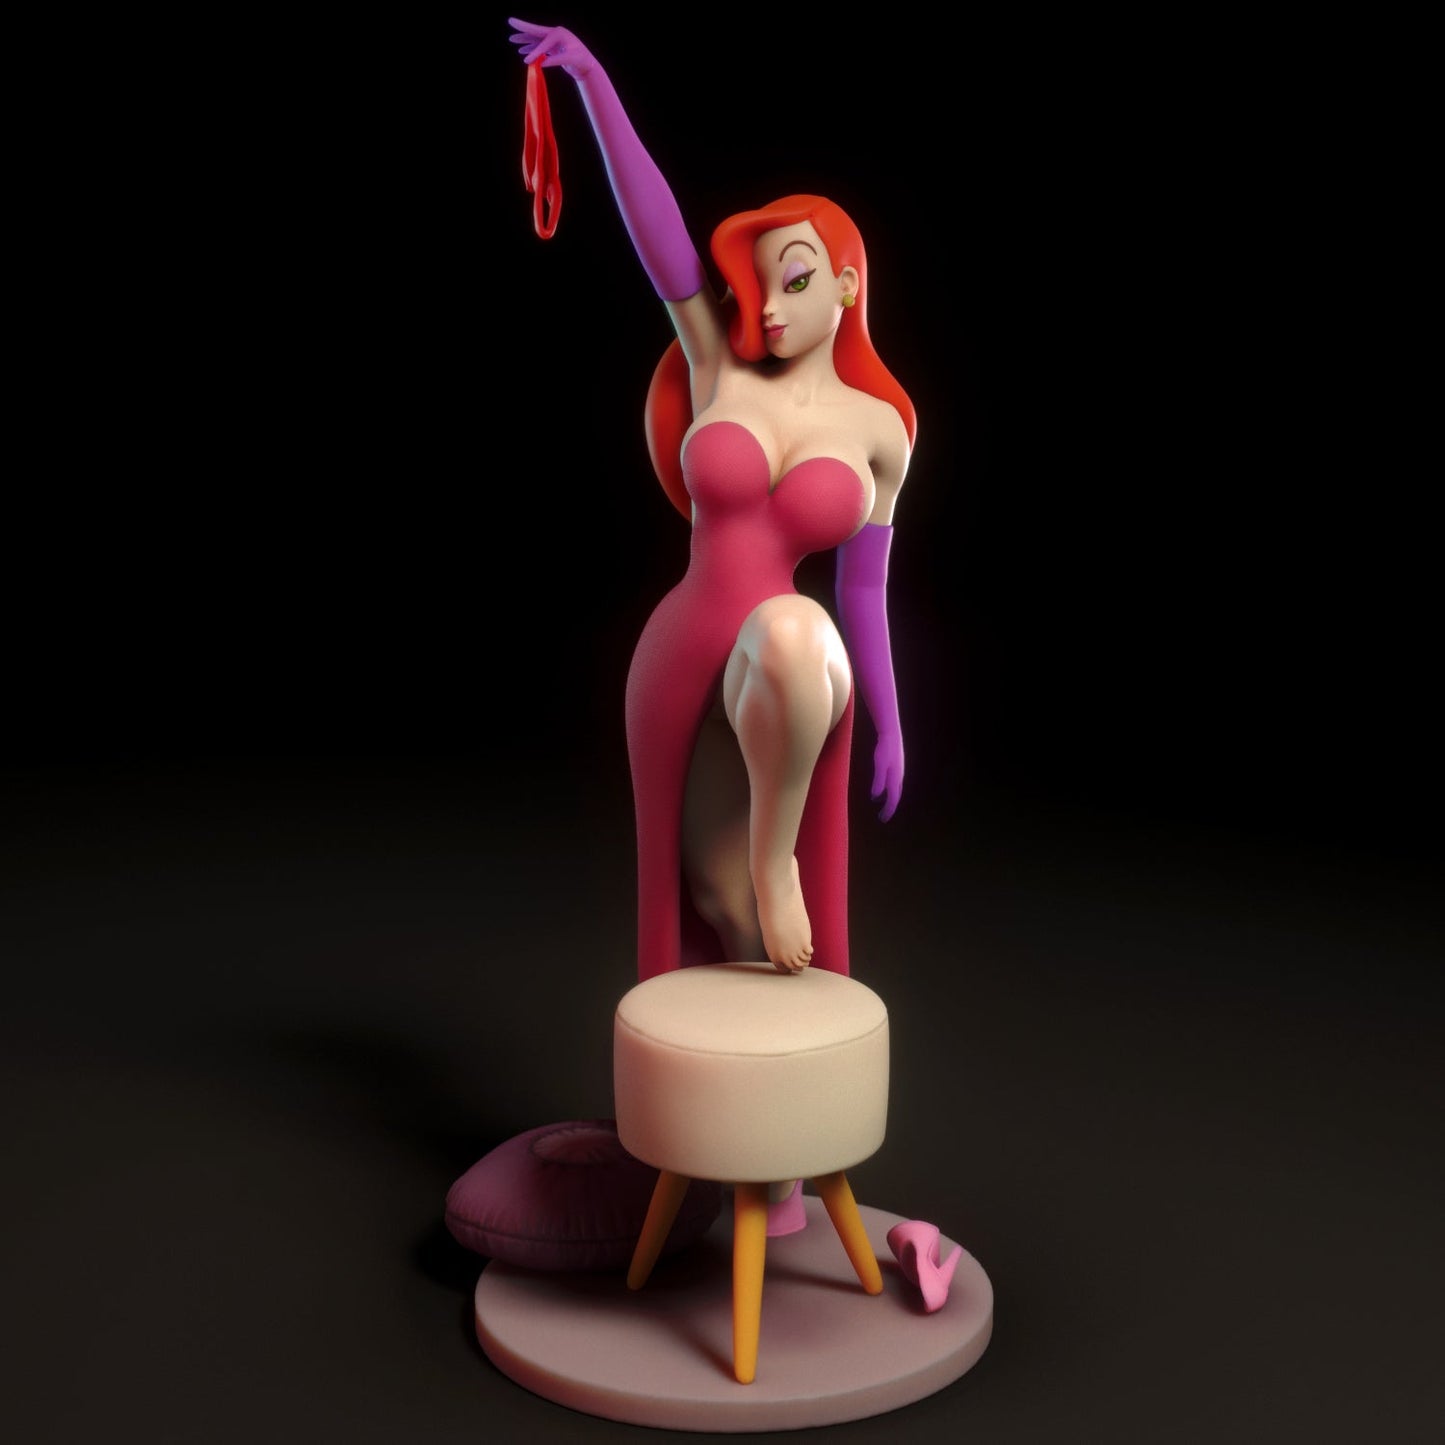 Jessica Rabbit Pin-Up 3D Printed figure Fanart by Torrida Minis